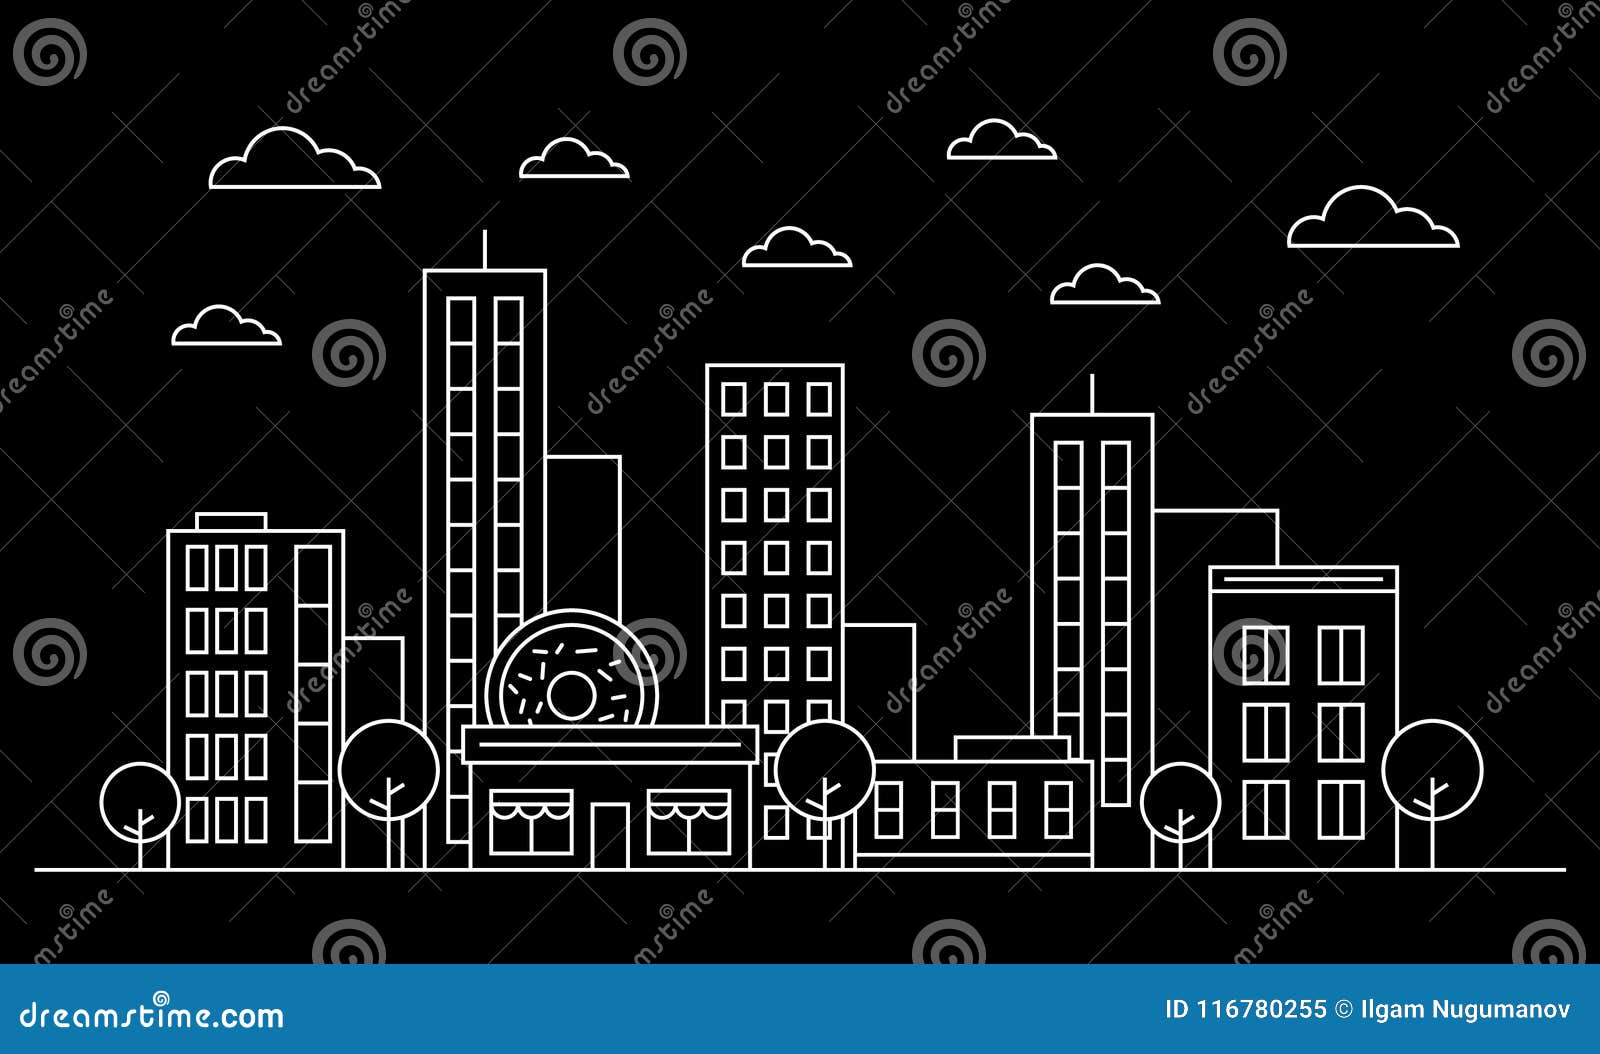 Outline City Skyline Landscape Facade Concept with Buildings ...